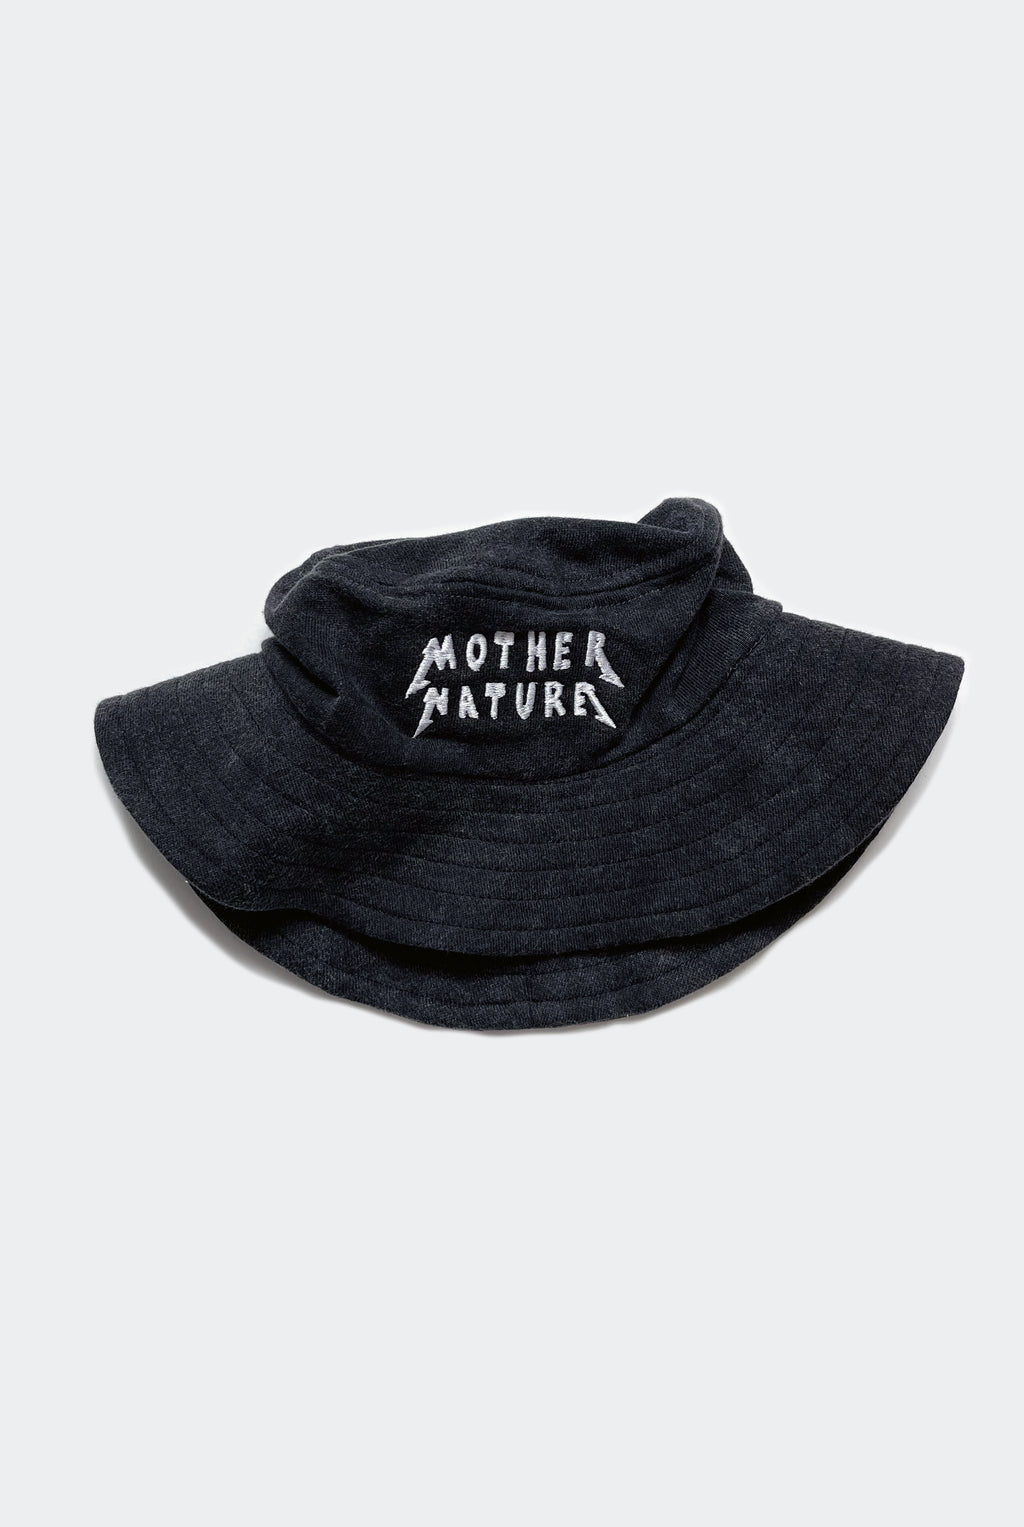 MOTHER NATURE HAT / WASHED BLACK PREORDER